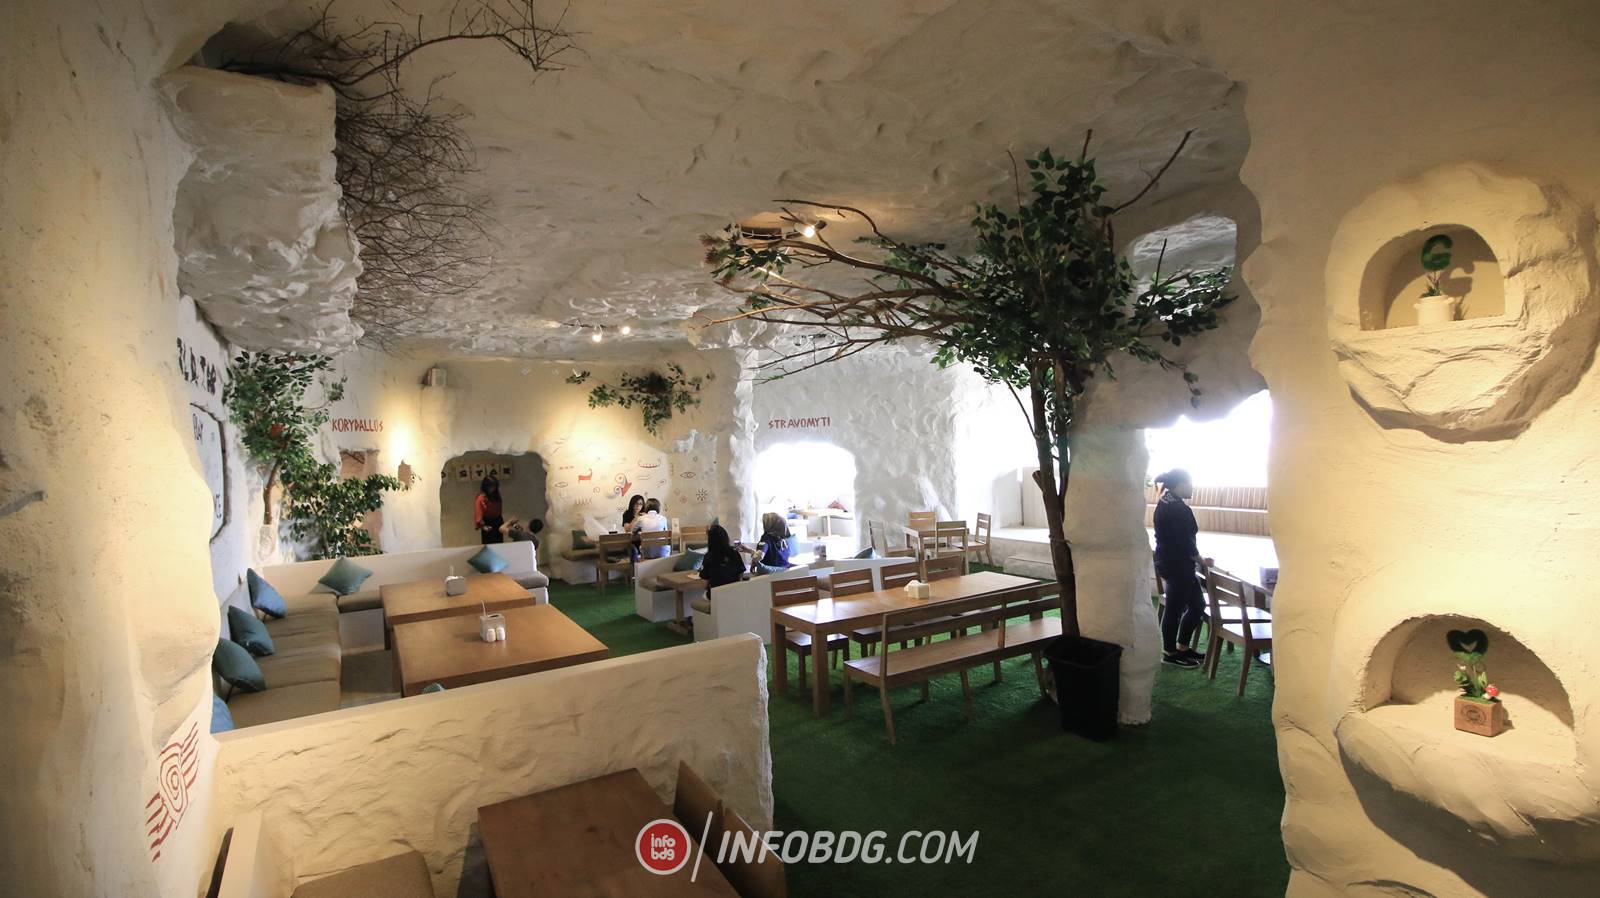 Nuansa Gua ala Santorini Yunani di Goldstar 360 Cafe | infobdg.com